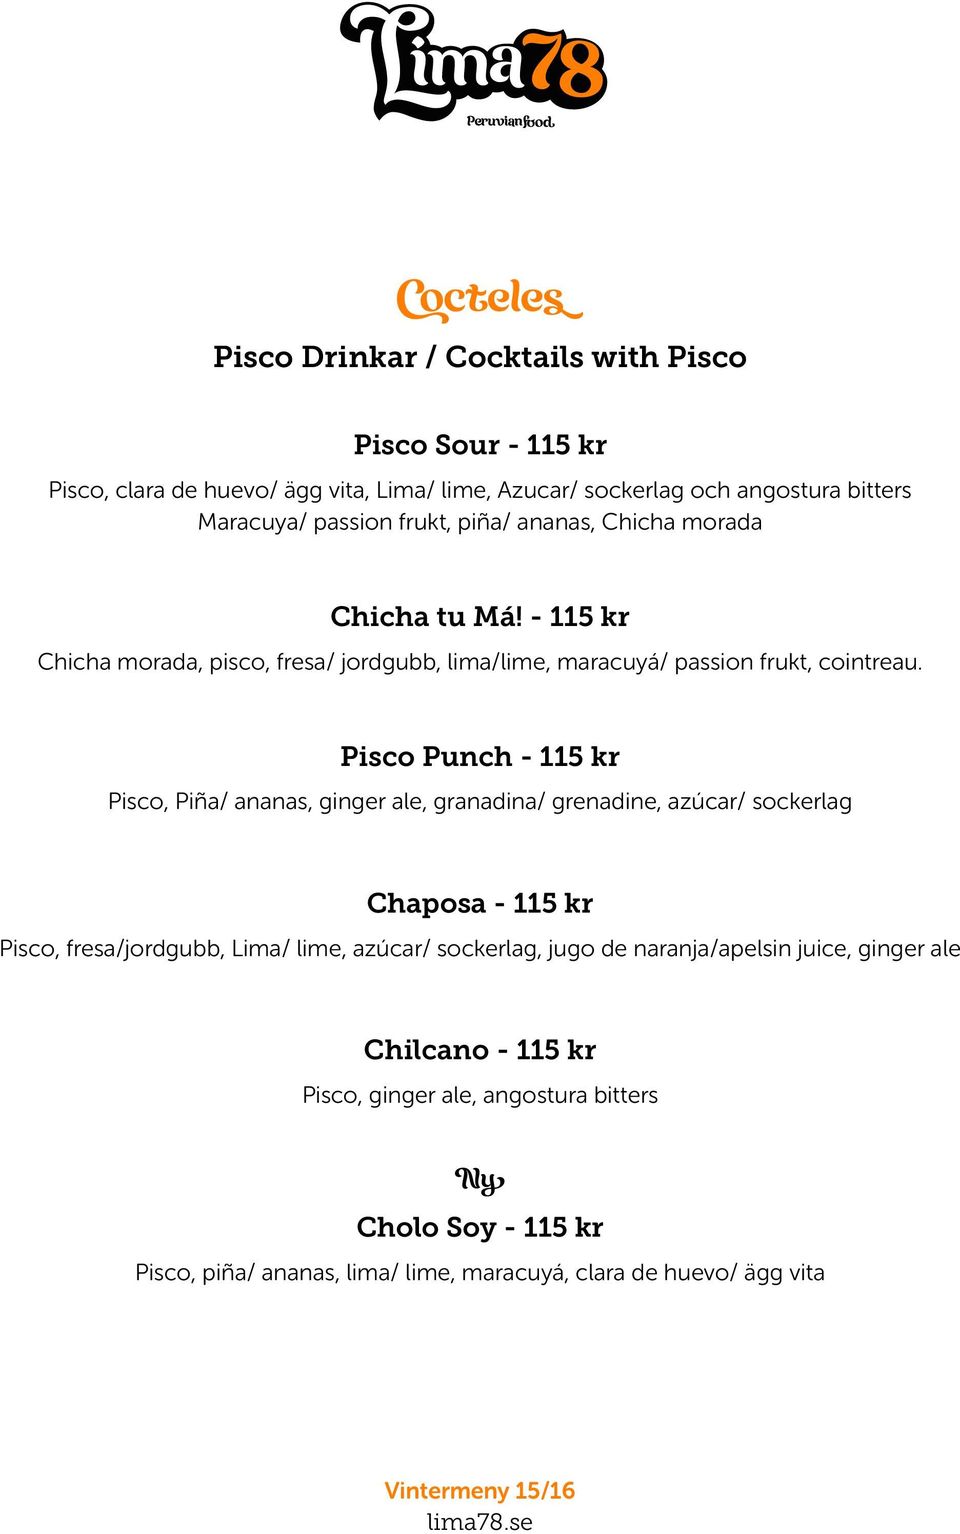 Pisco Punch - 115 kr Pisco, Piña/ ananas, ginger ale, granadina/ grenadine, azúcar/ sockerlag Chaposa - 115 kr Pisco, fresa/jordgubb, Lima/ lime, azúcar/ sockerlag, jugo de